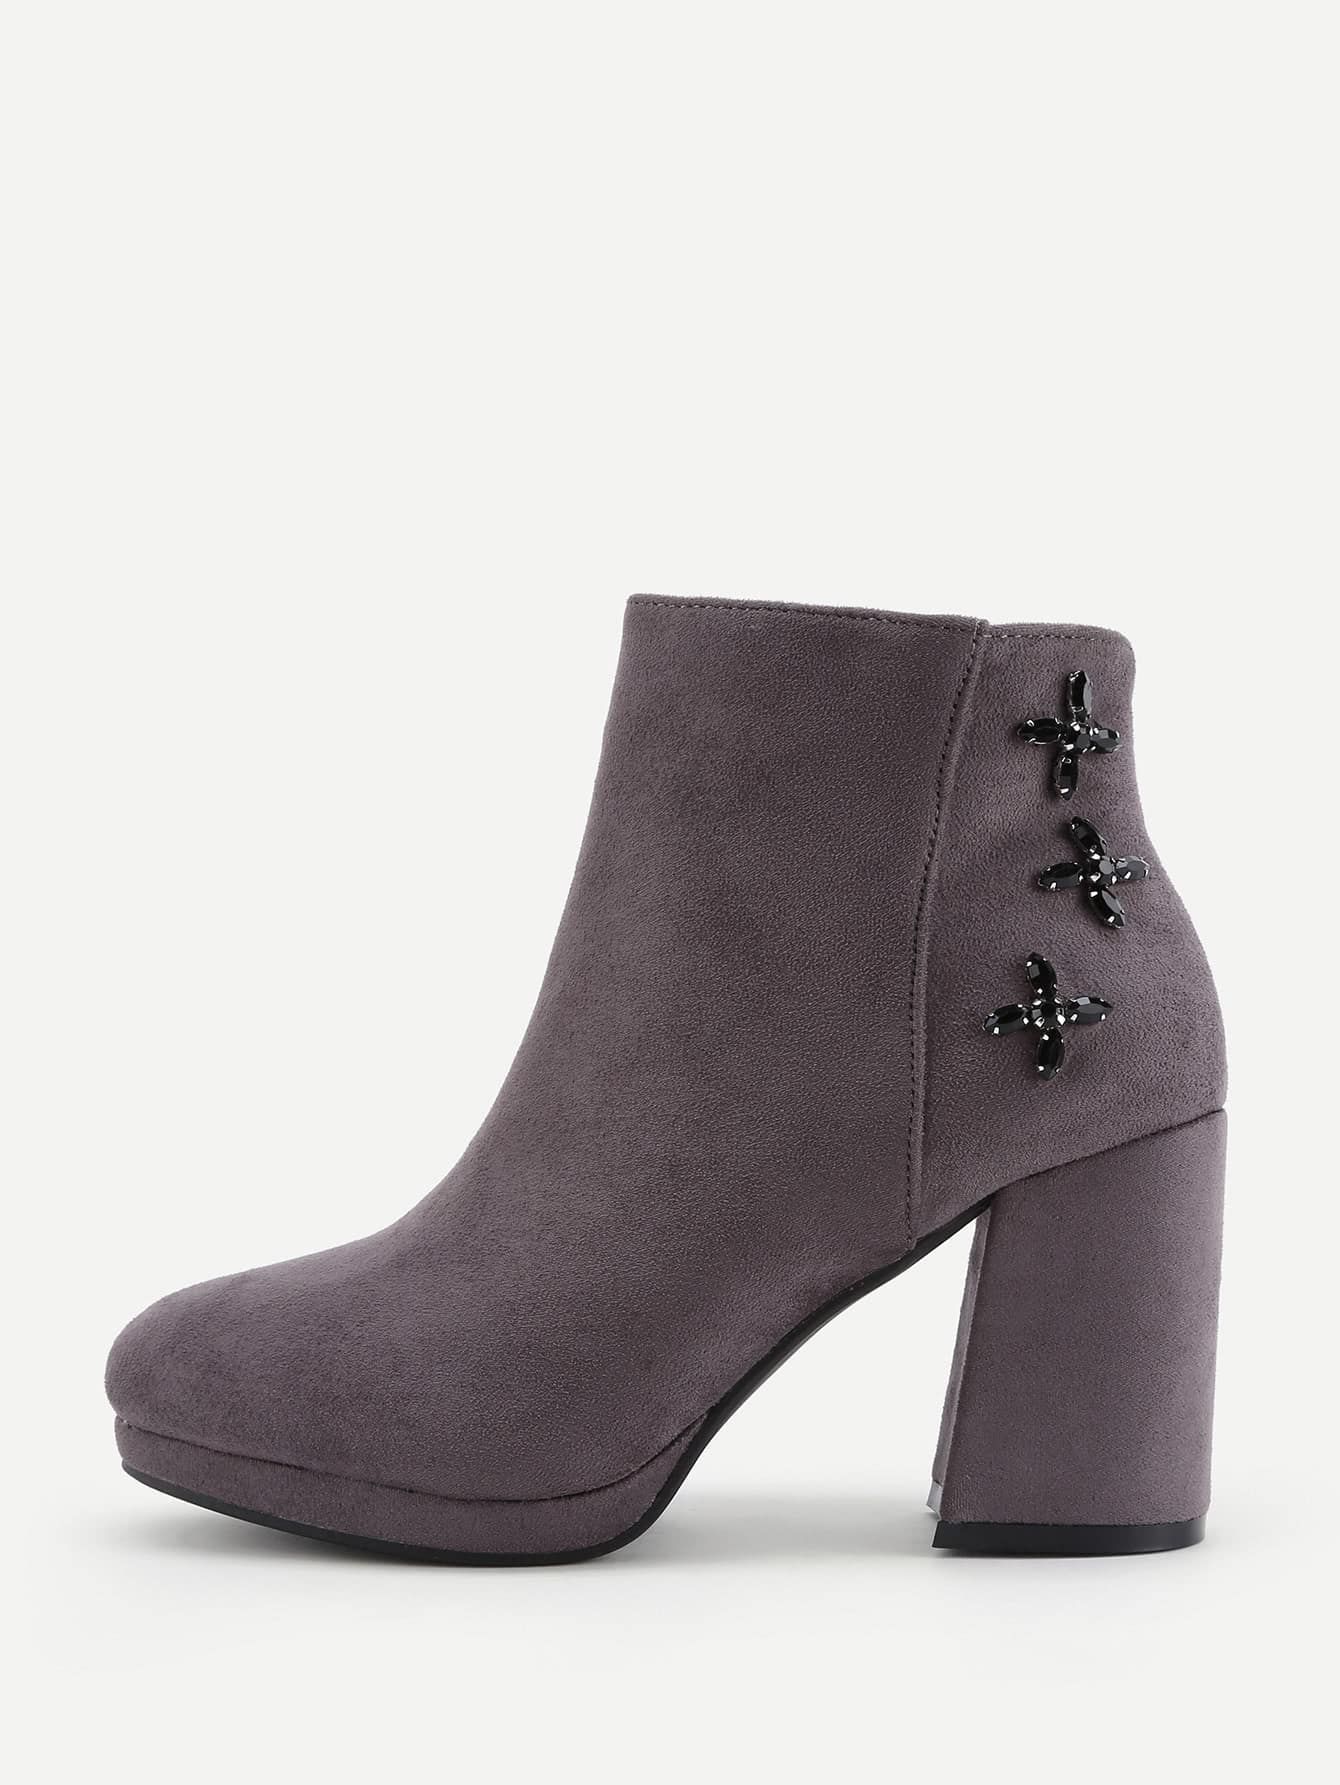 Rhinestone Flower High Heeled Ankle Boots | SHEIN